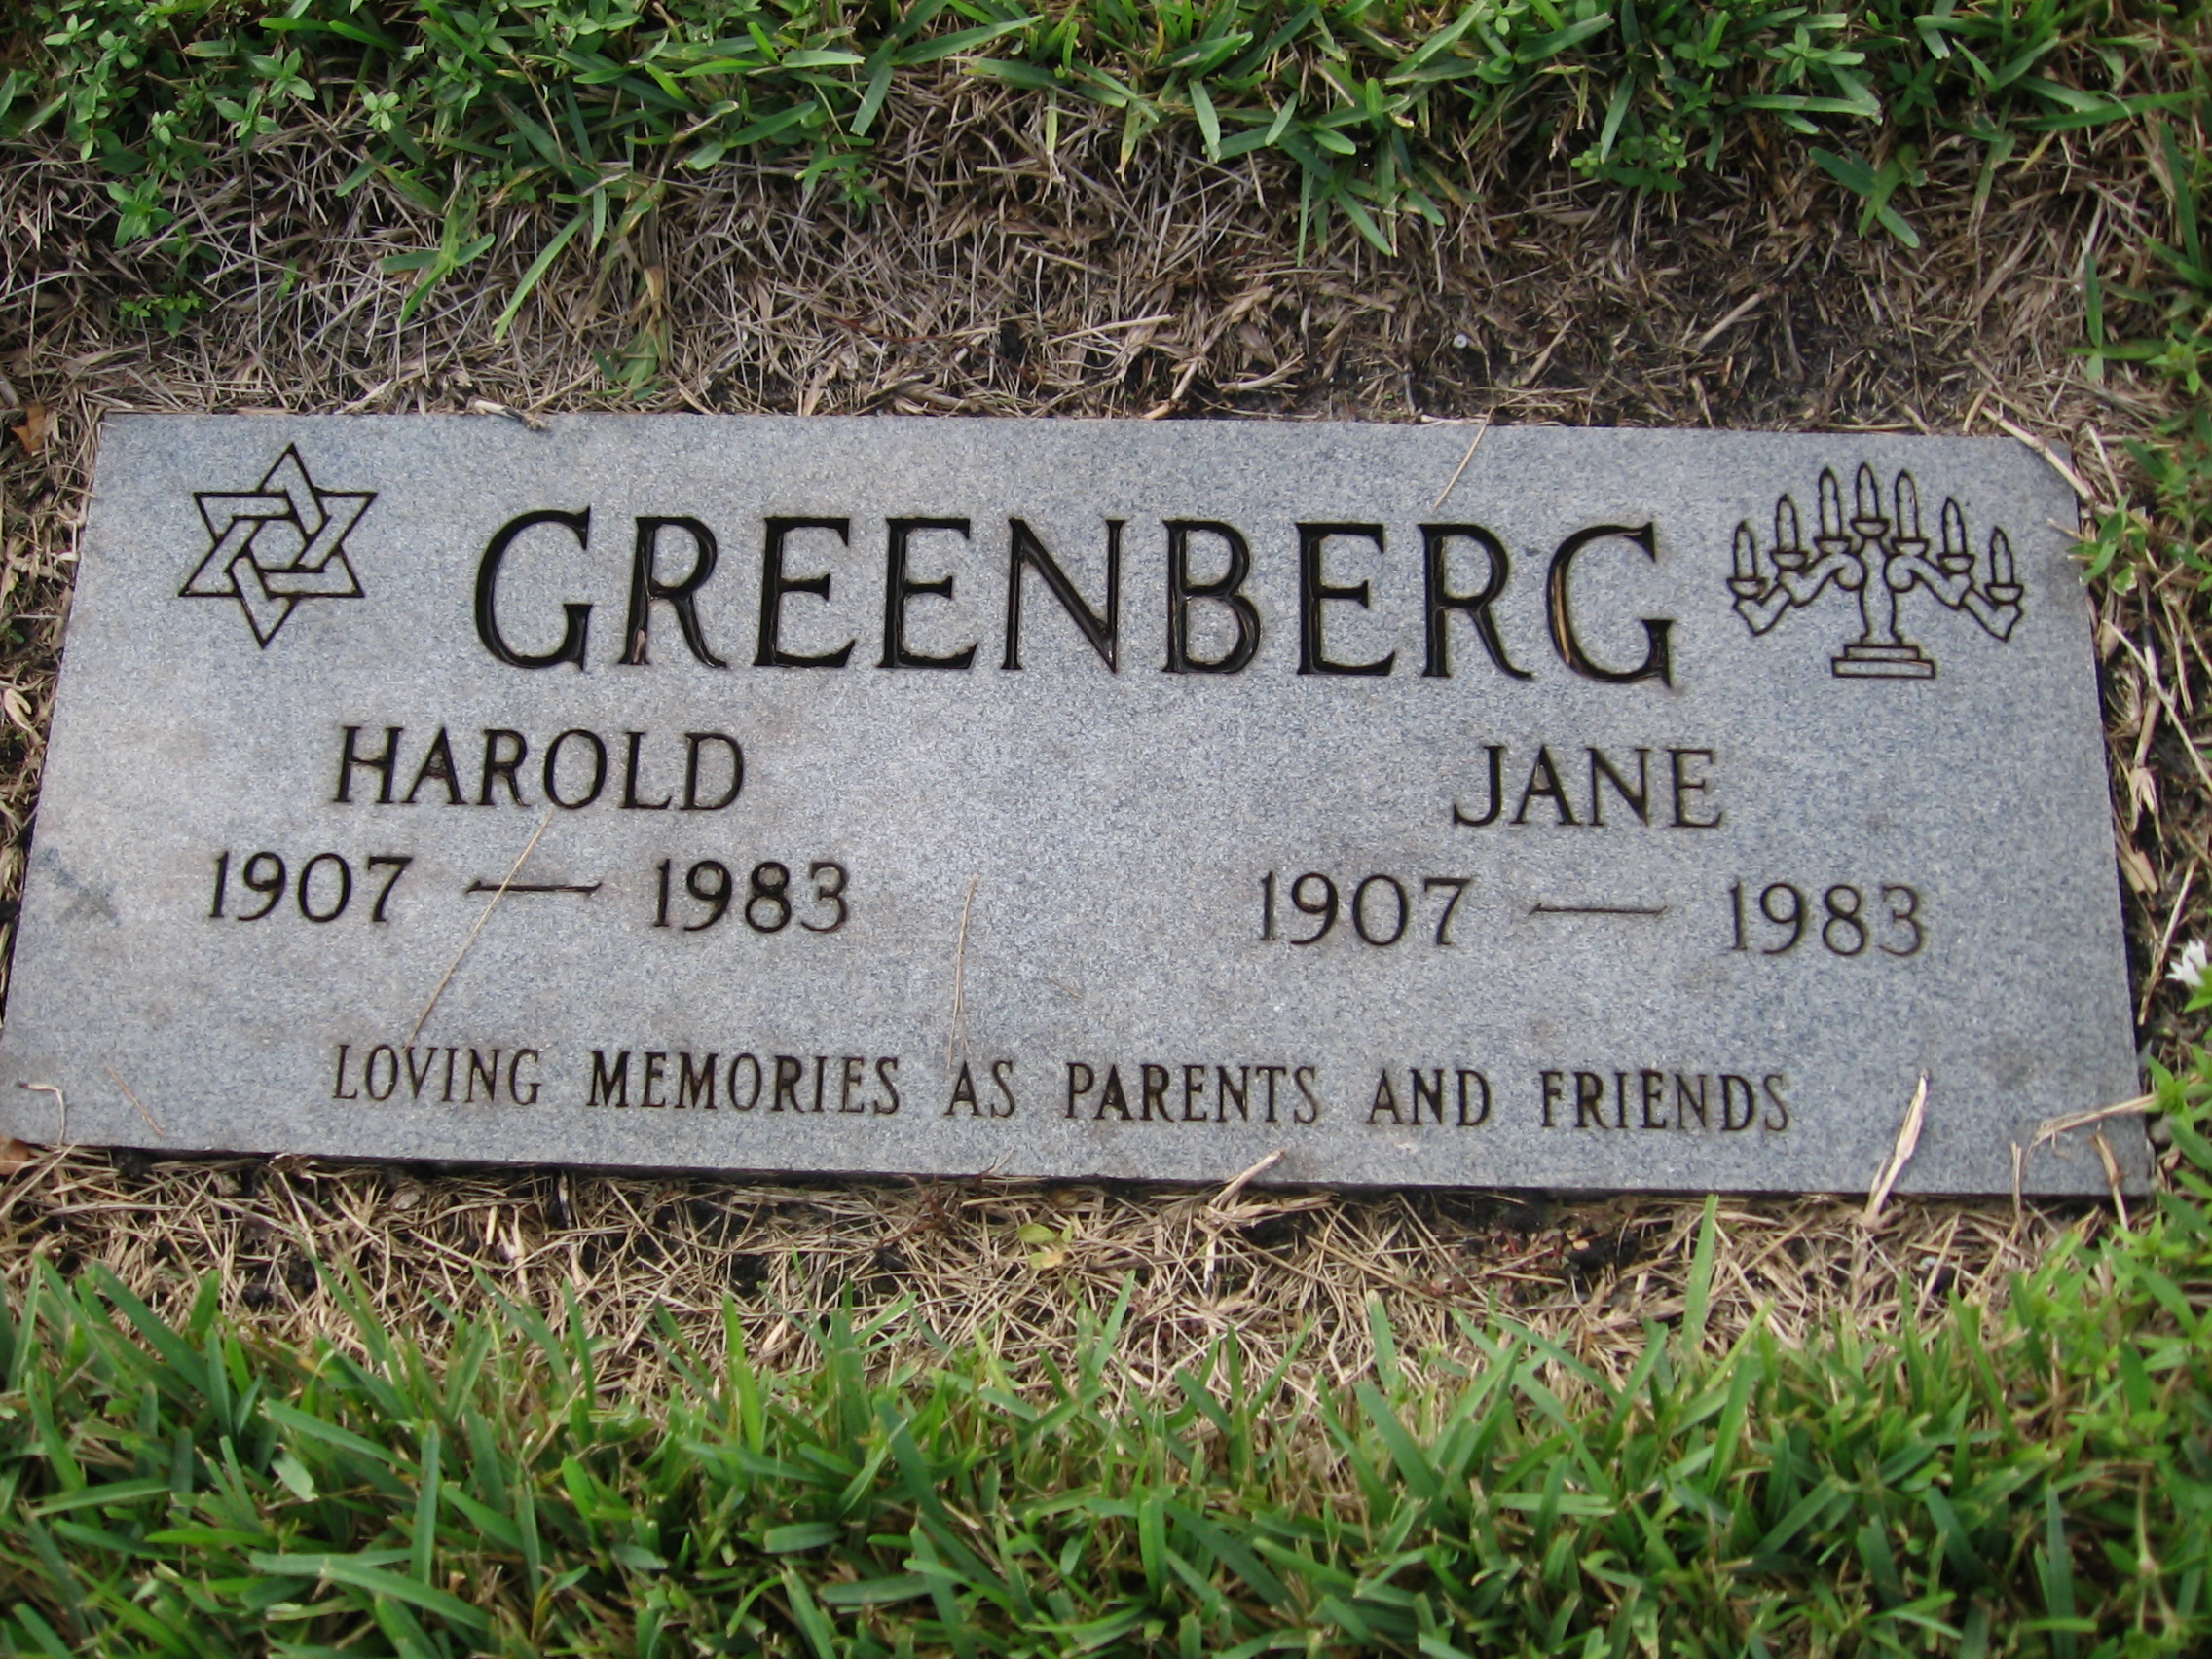 Harold Greenberg